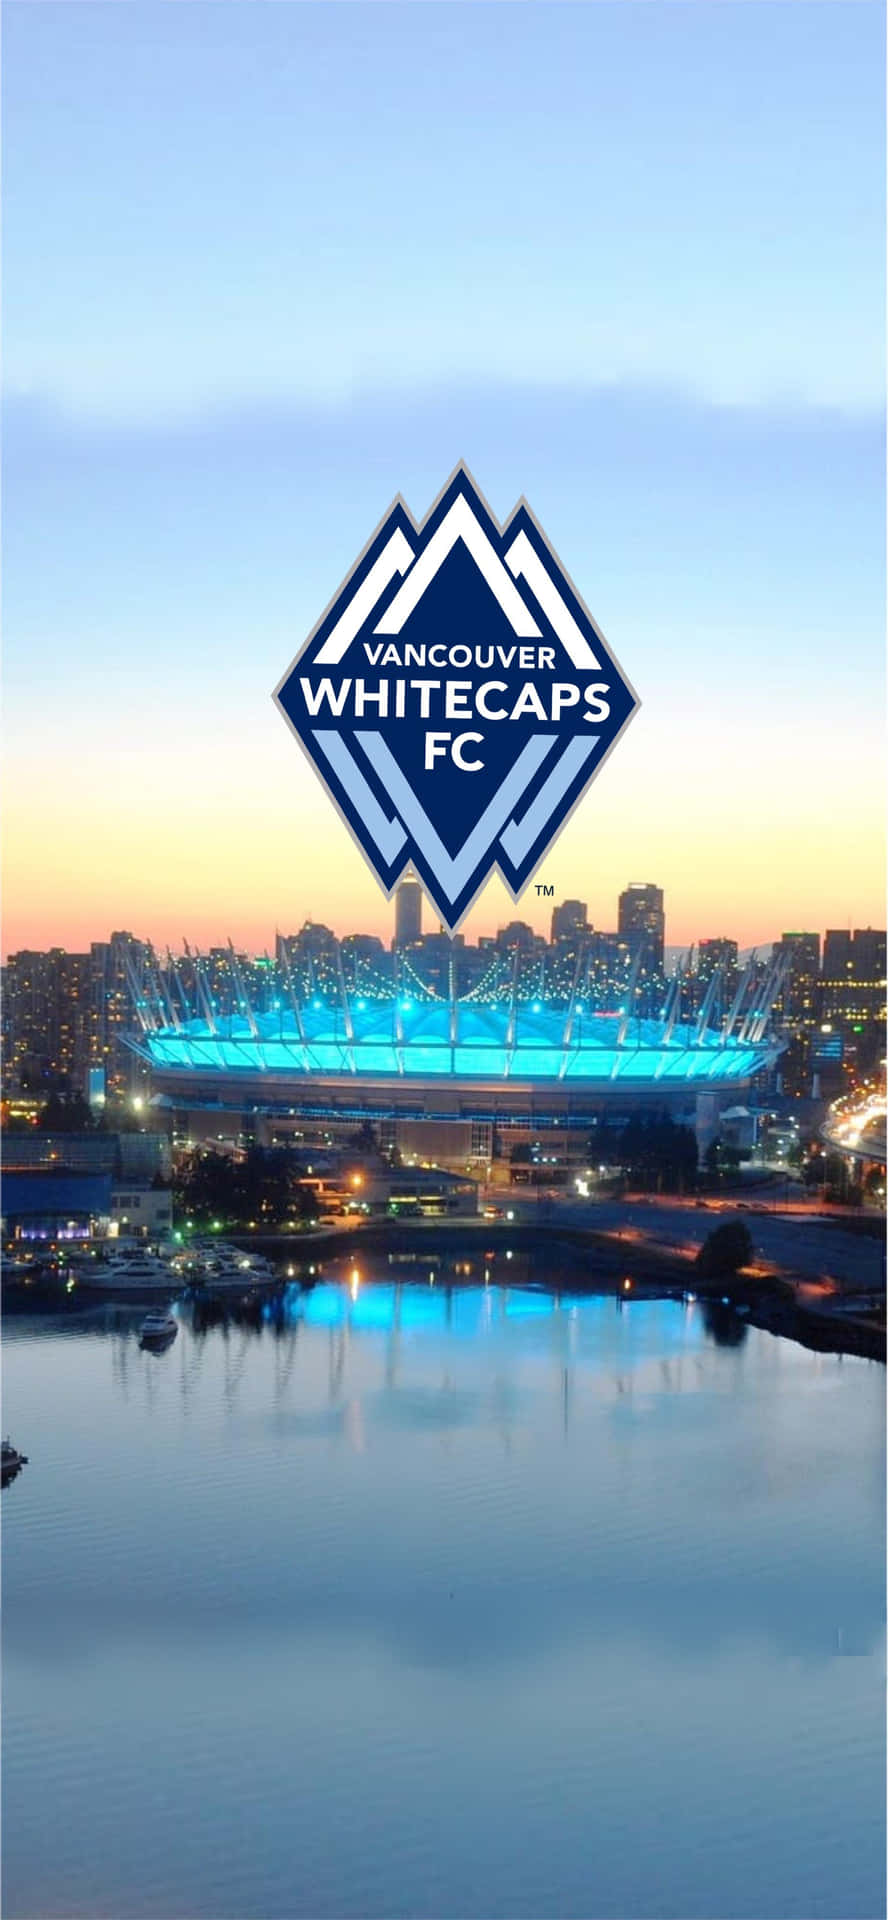 Vancouver Whitecaps Fc Bc Palace Stadium Picture